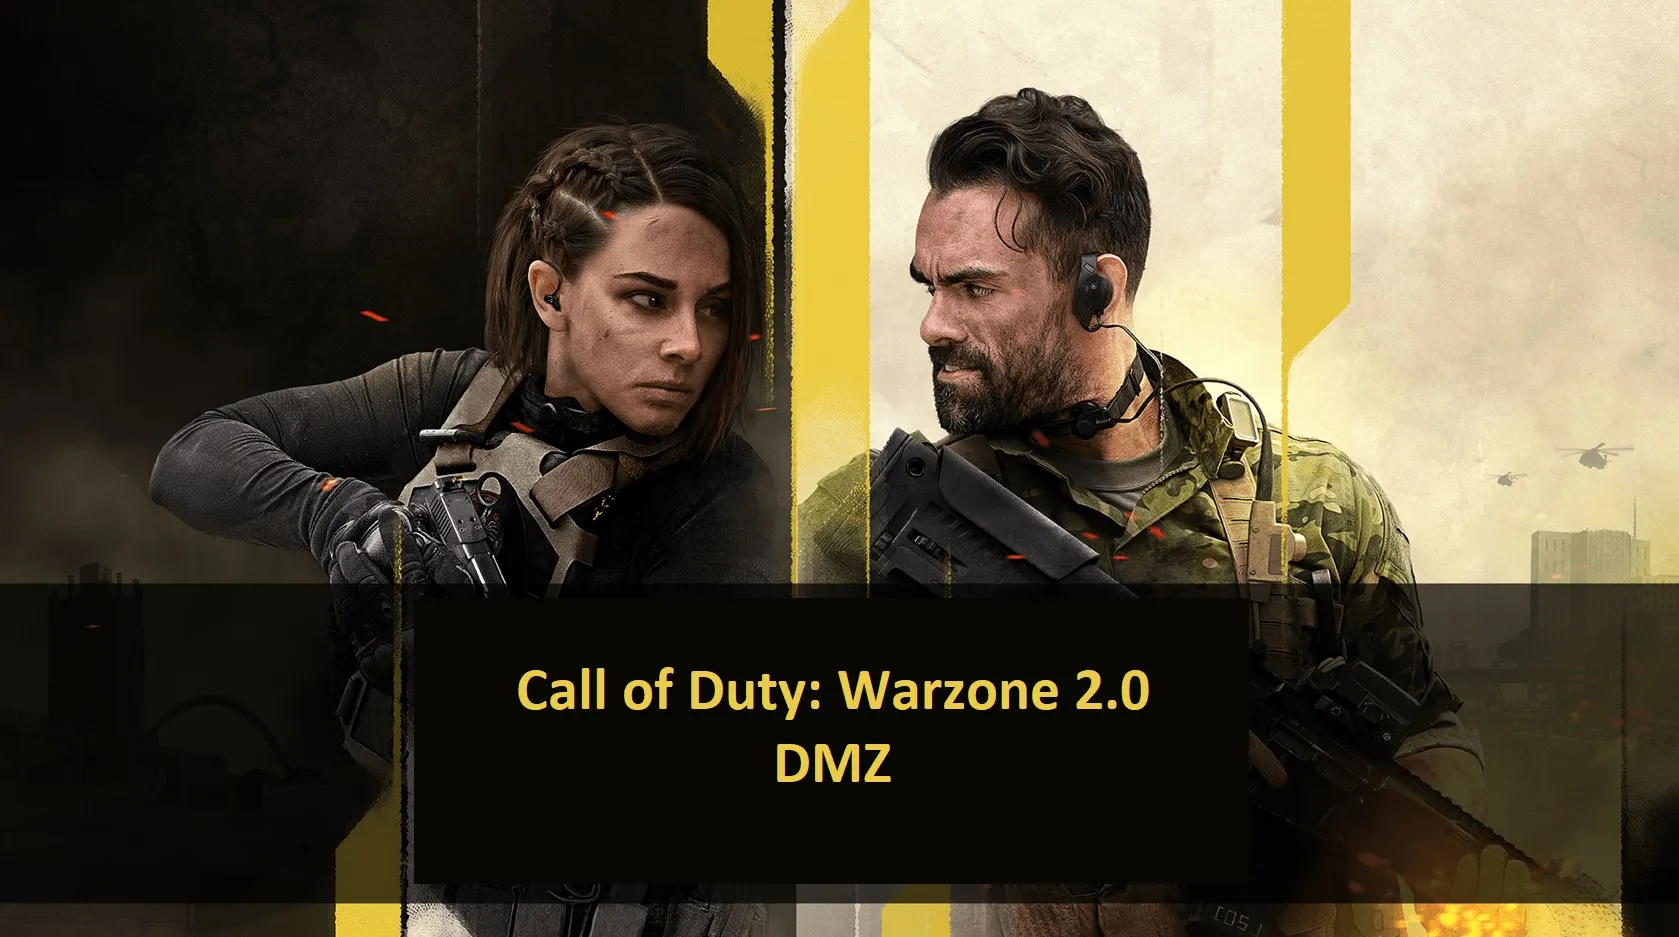 call of duty dmz